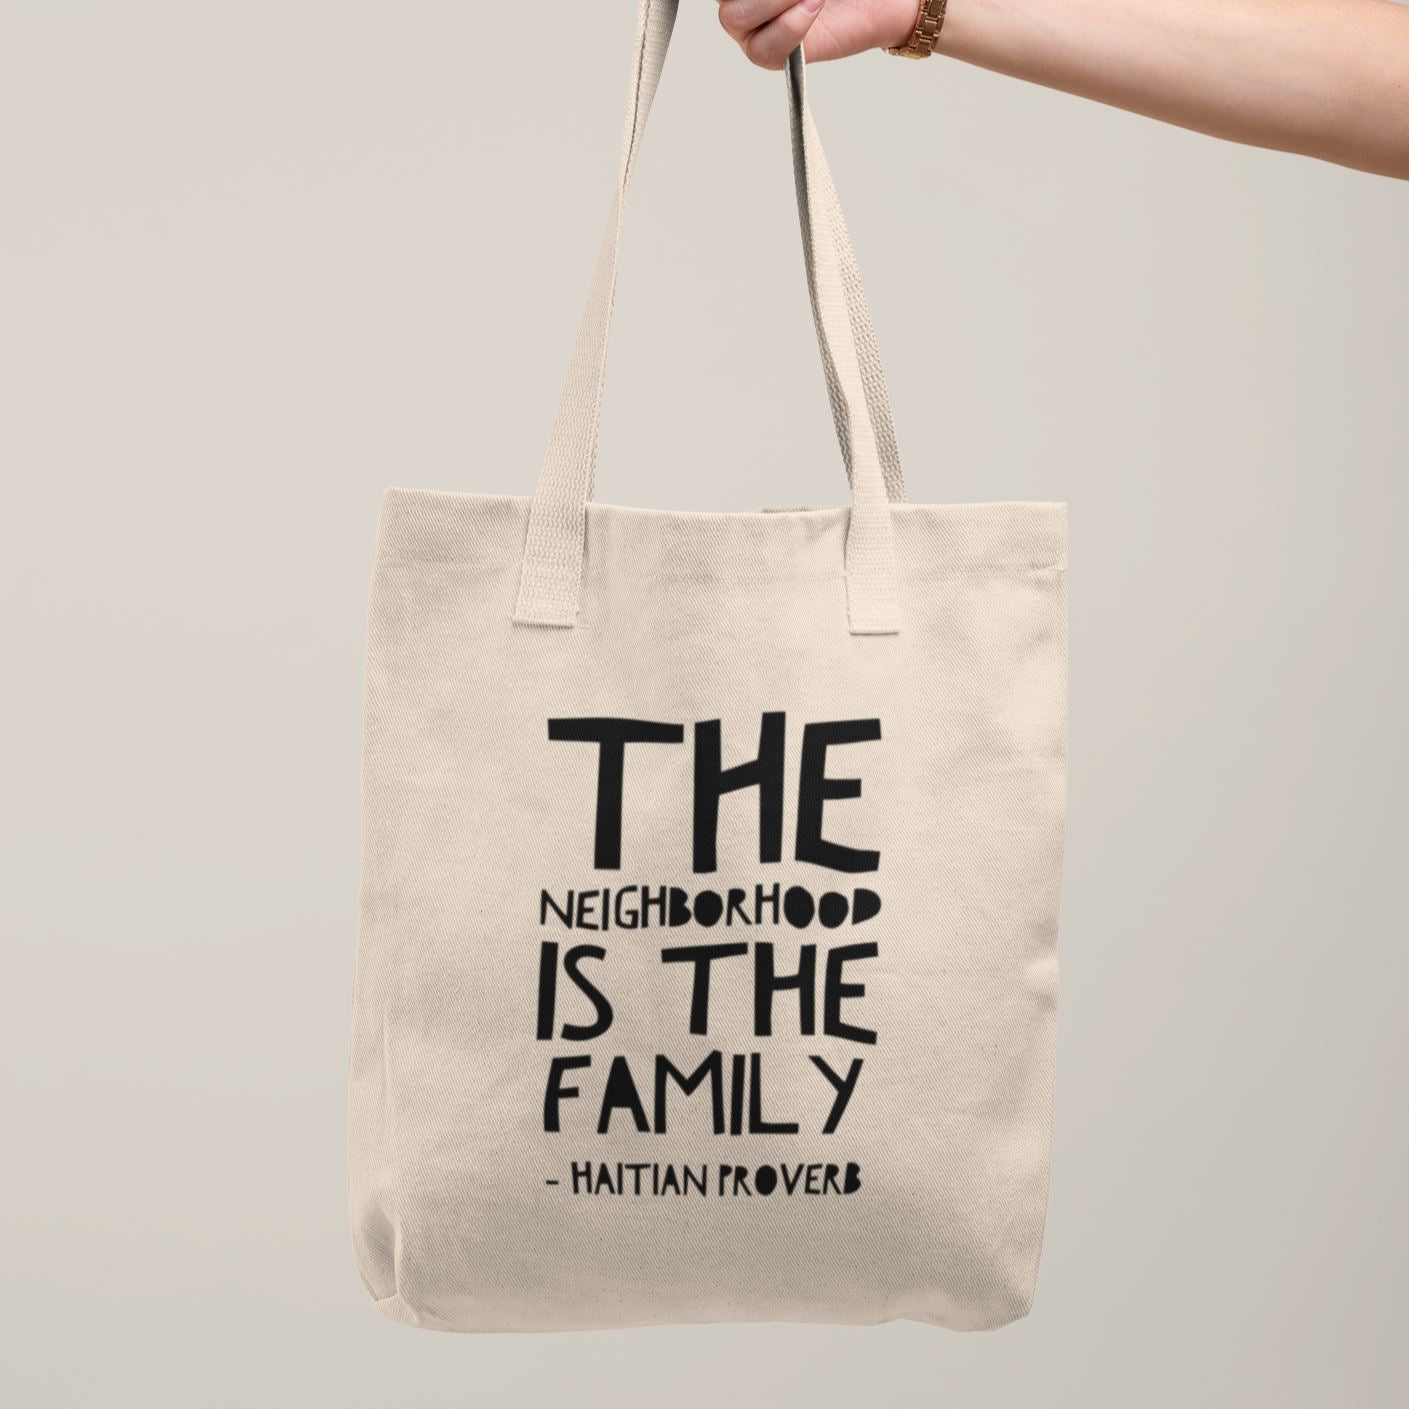 The Neighborhood Is The Family | Haiti Relief Tote Bag